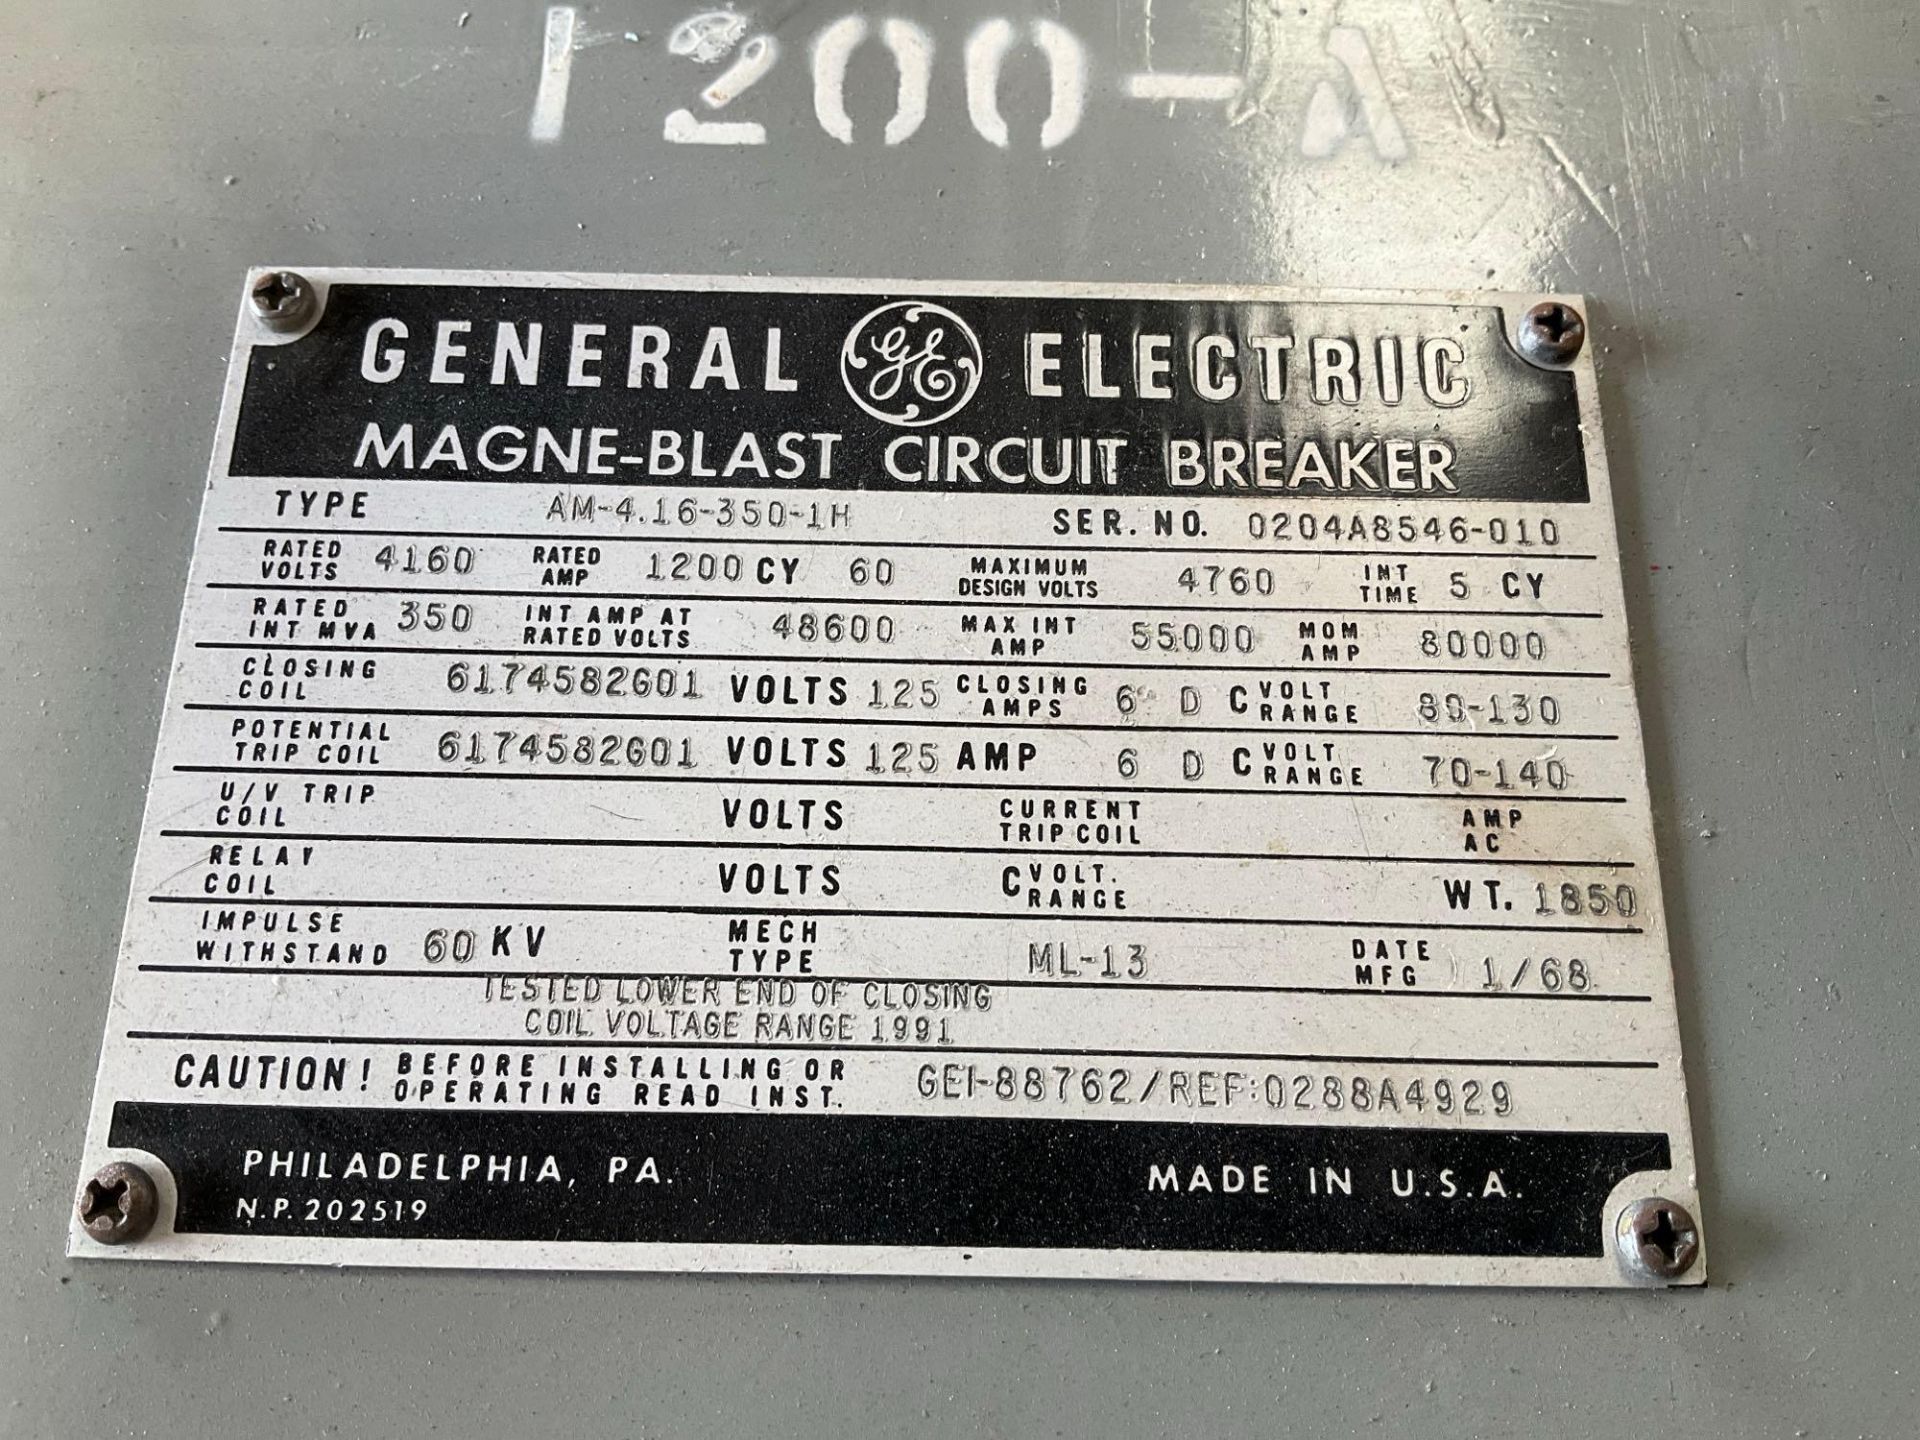 GE - GENERAL ELECTRIC MAGNE-BLAST CIRCUIT BREAKER, TYPE AM-4.16-350-2H, 60HZ, 1200 AMP - Image 10 of 13